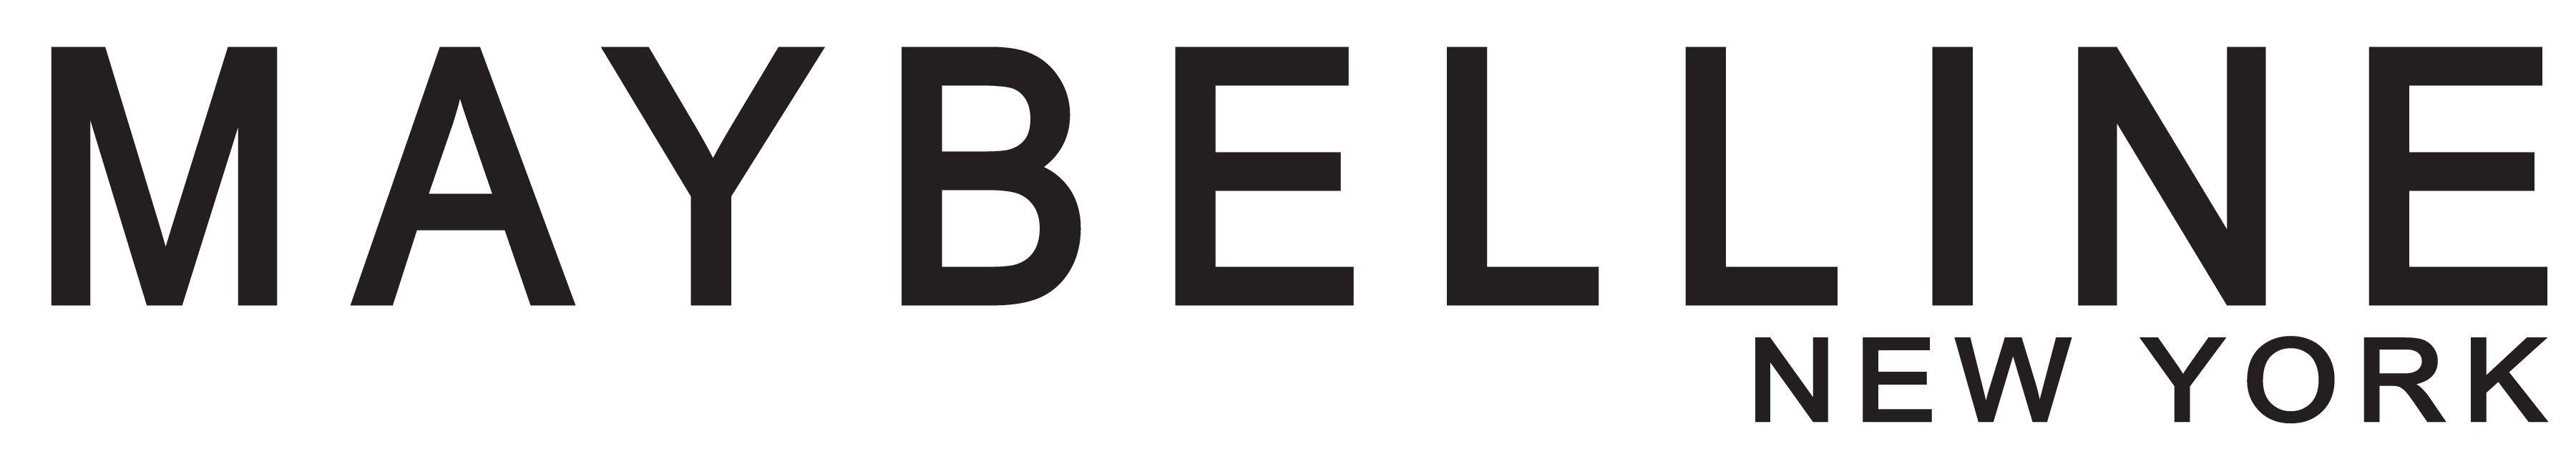 Maybelline Company Logo - Maybelline Logos